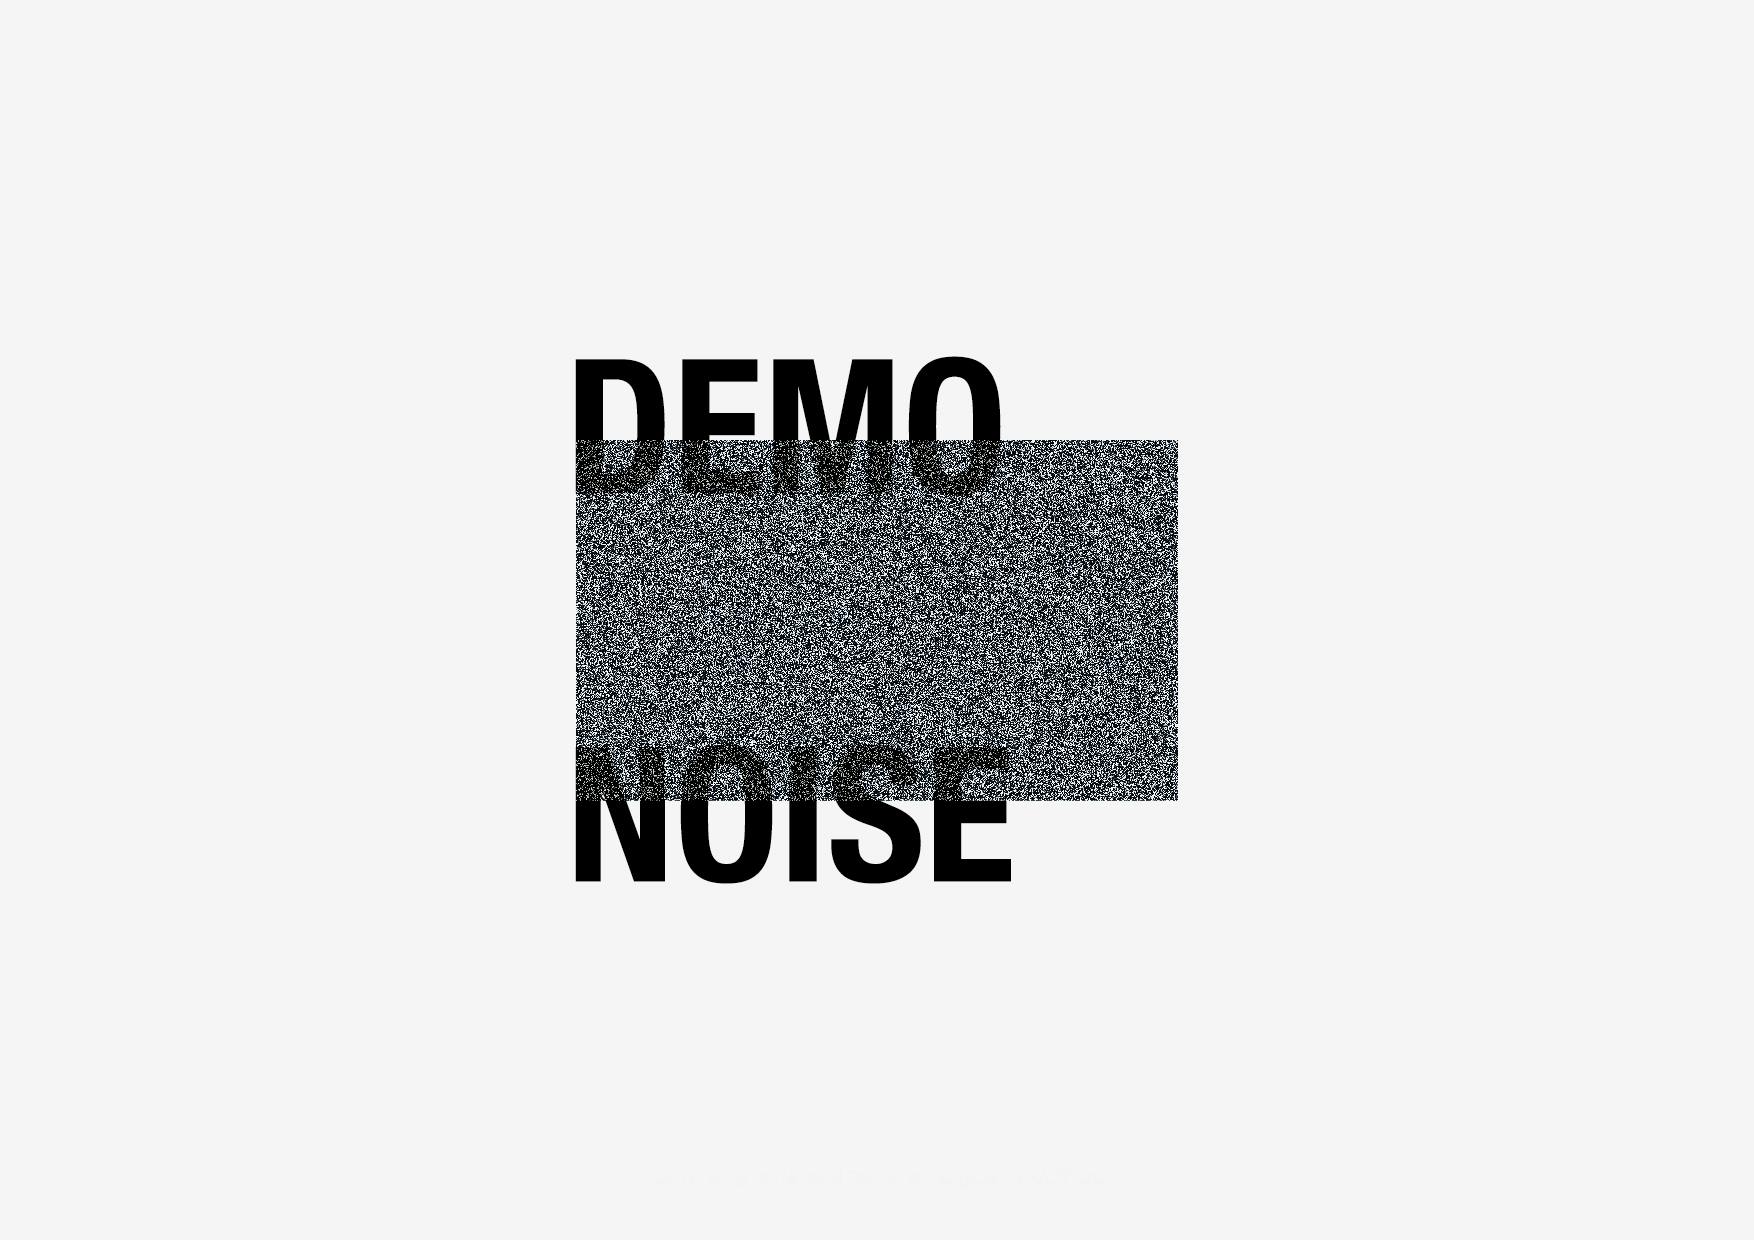 w--demo-noise-01